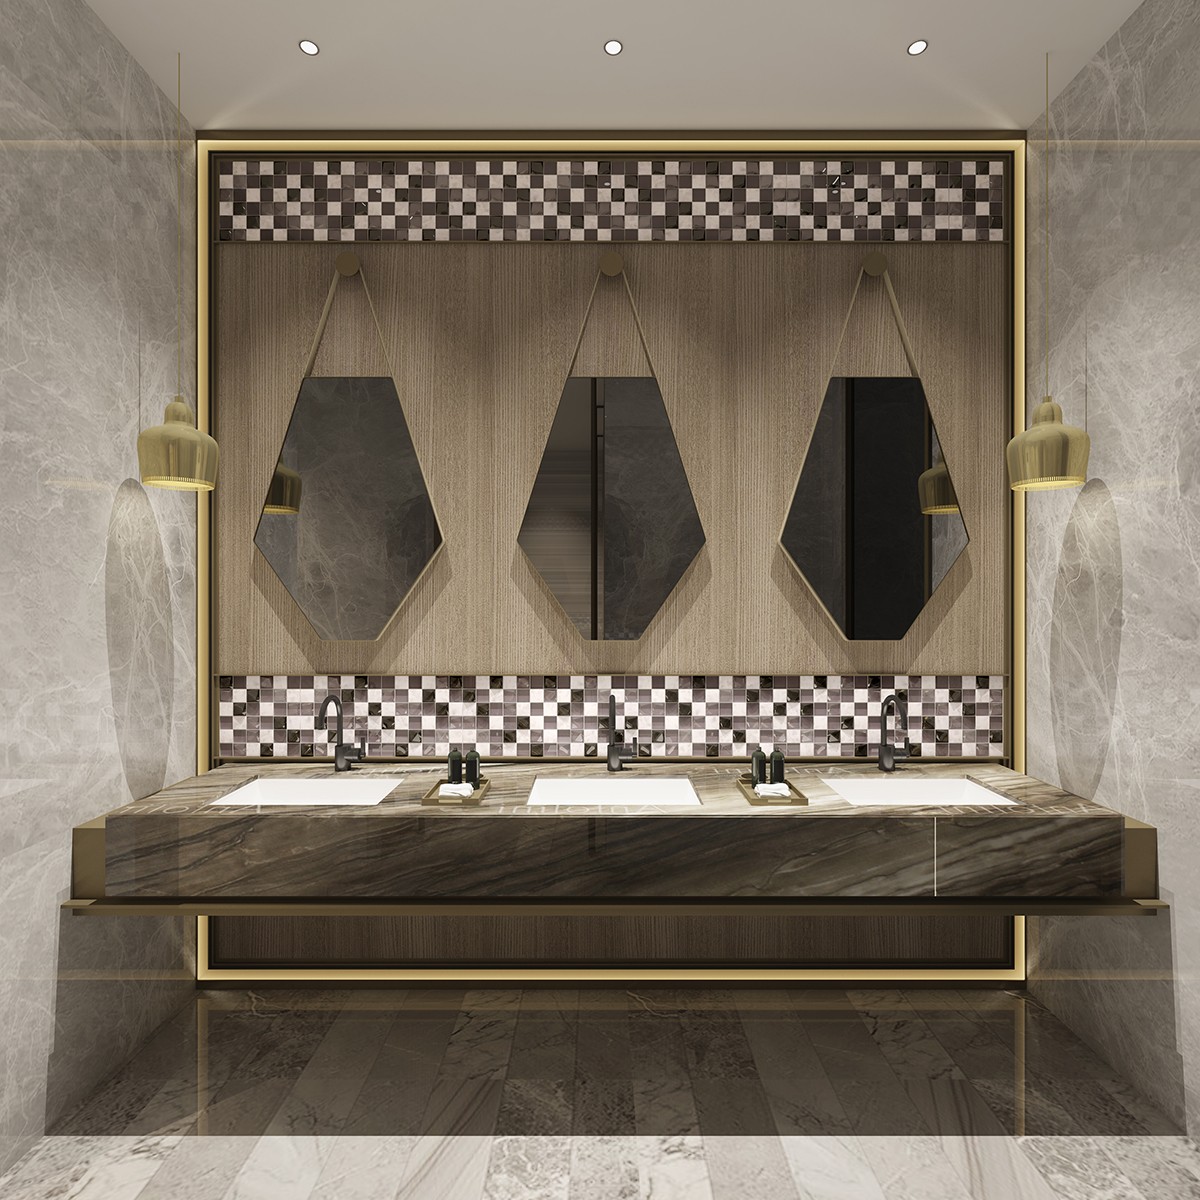 Heng Xing New metal tiles Suppliers for bathroom-9